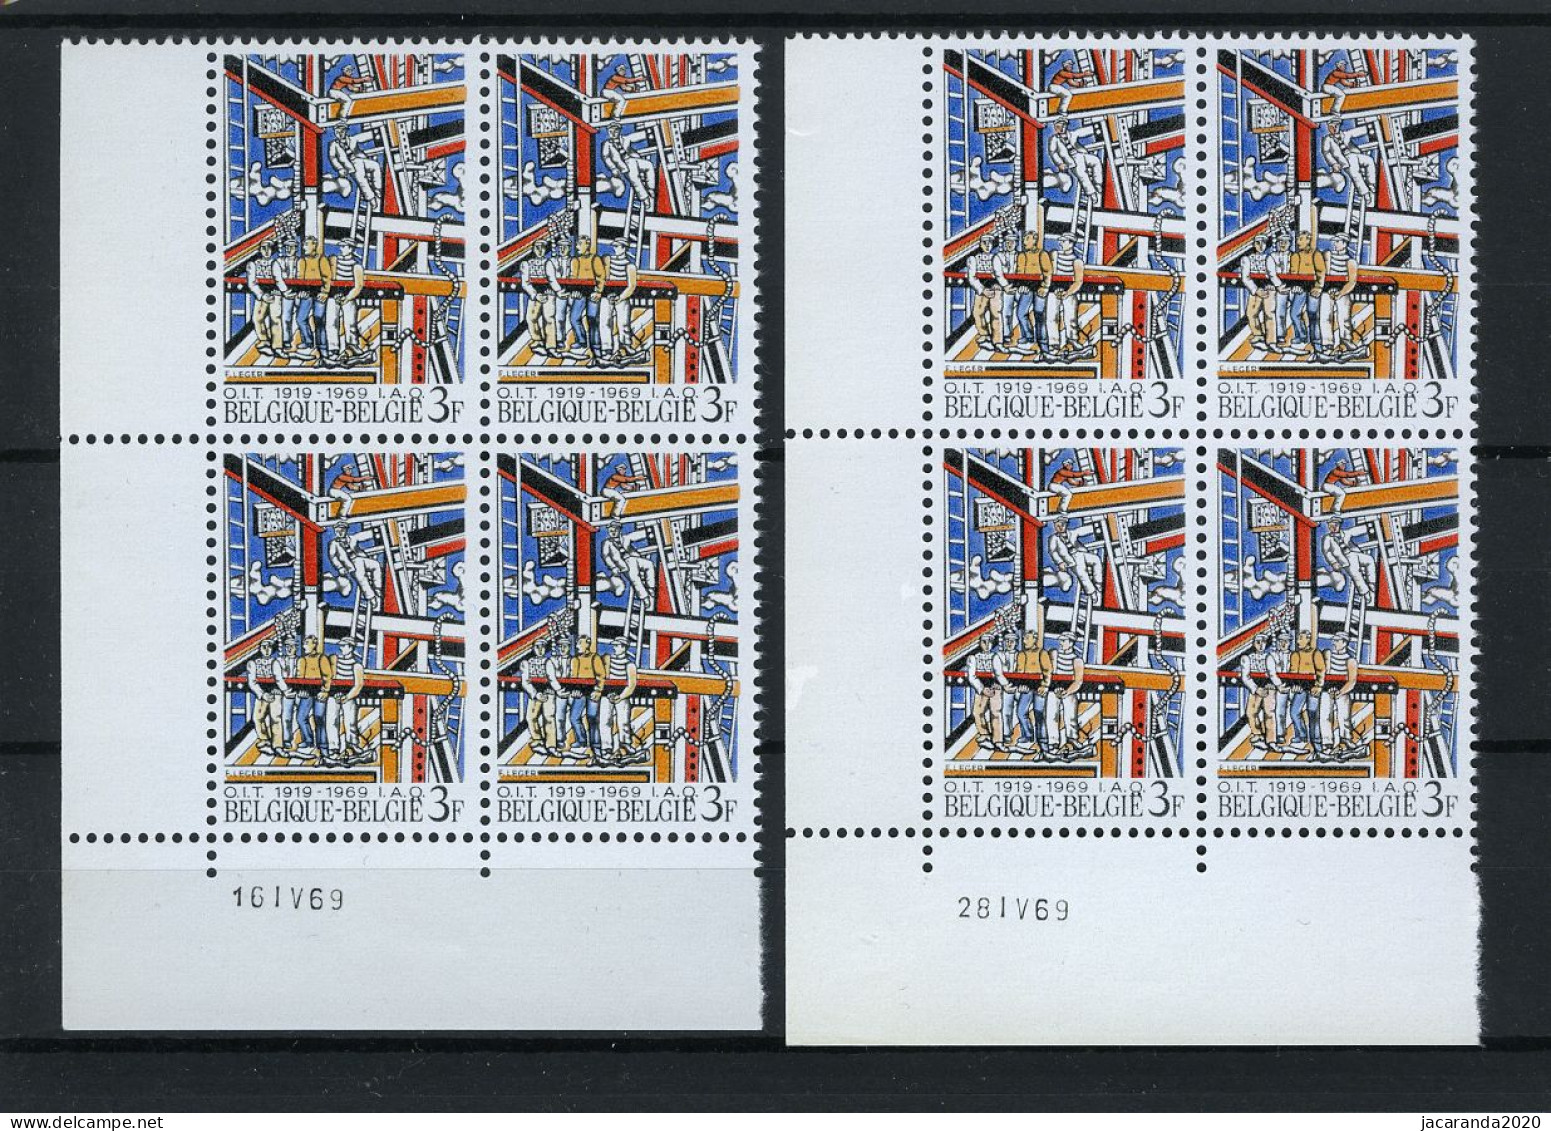 België 1497 - 50 Jaar I.A.O. - Fernand Léger - 16 IV 69 En 28 IV 69 - Esquinas Fechadas